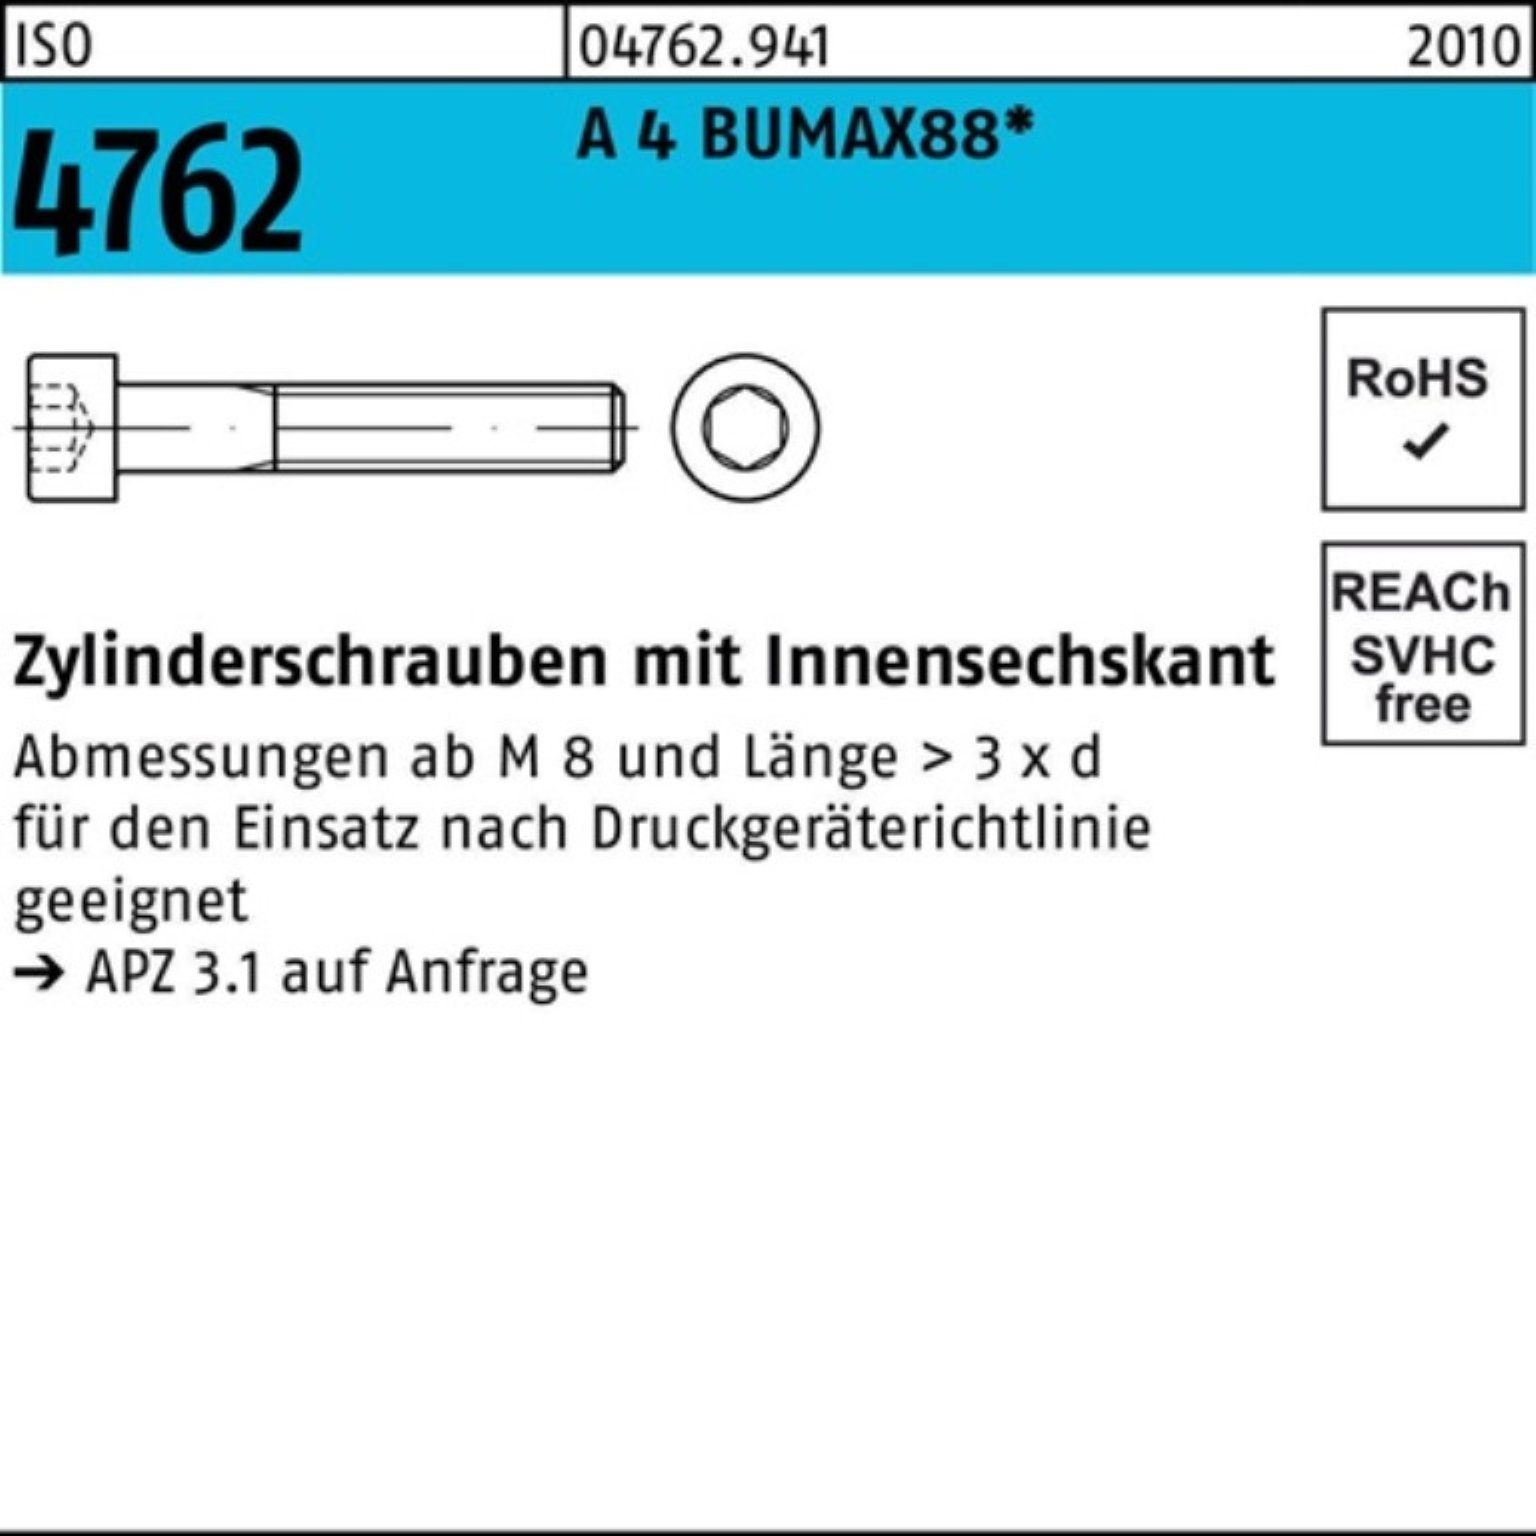 Bufab Zylinderschraube 100er Pack Zylinderschraube ISO 4762 Innen-6kt M12x 80 A 4 BUMAX88 25